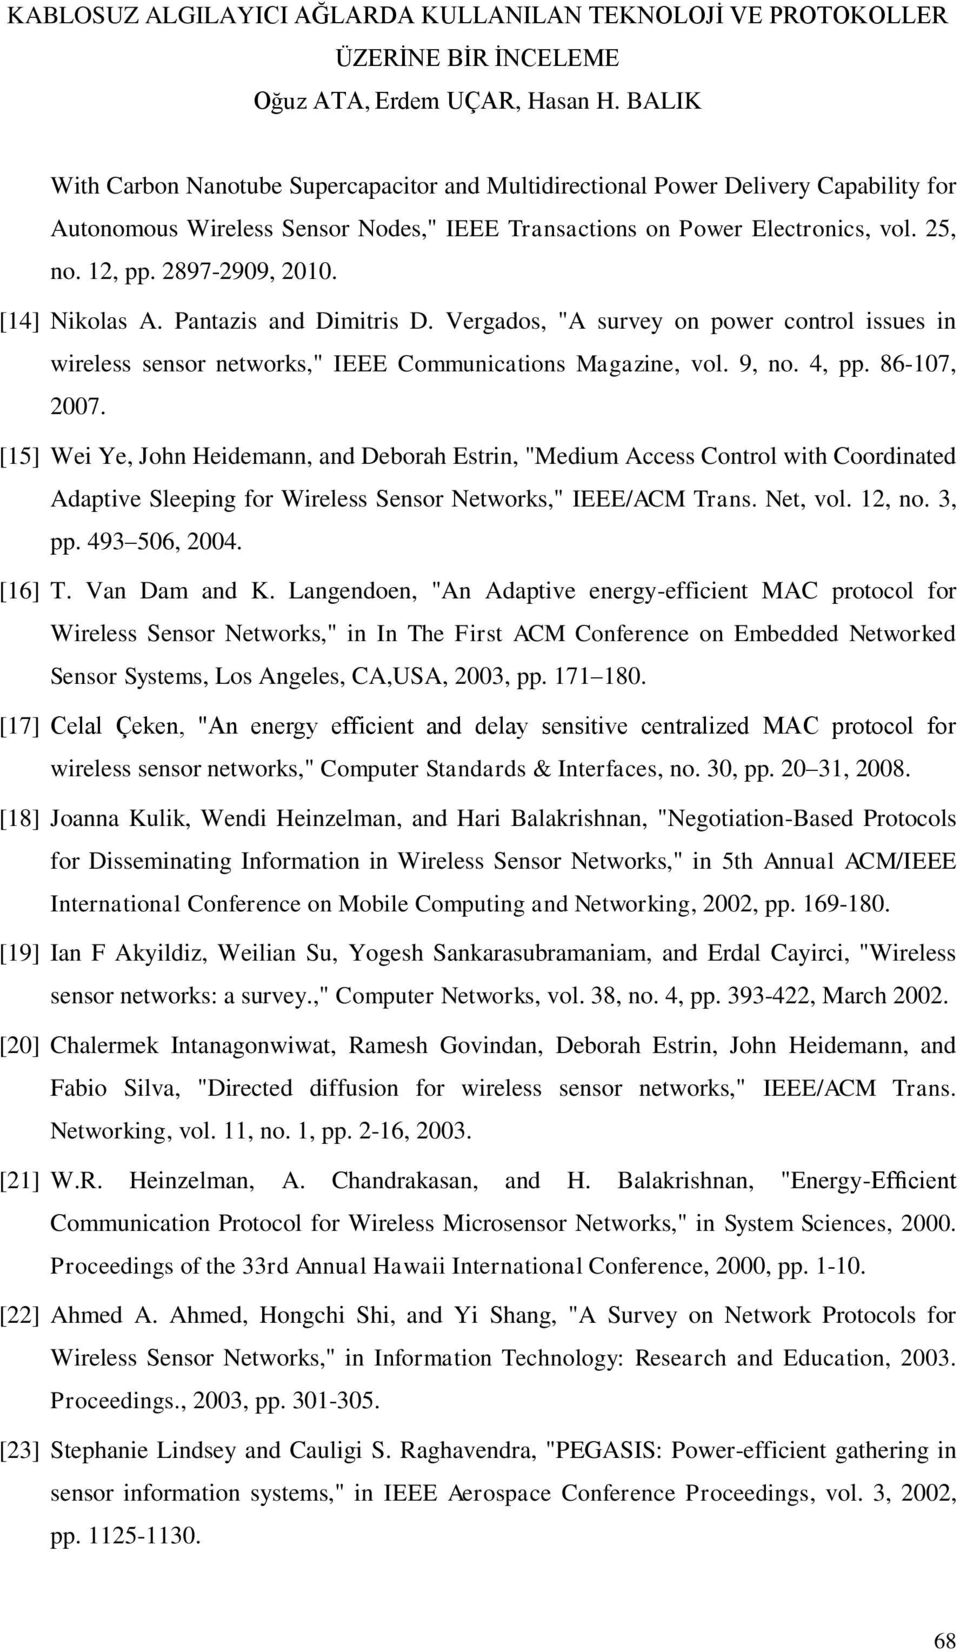 [15] Wei Ye, John Heidemann, and Deborah Estrin, "Medium Access Control with Coordinated Adaptive Sleeping for Wireless Sensor Networks," IEEE/ACM Trans. Net, vol. 12, no. 3, pp. 493 506, 2004.